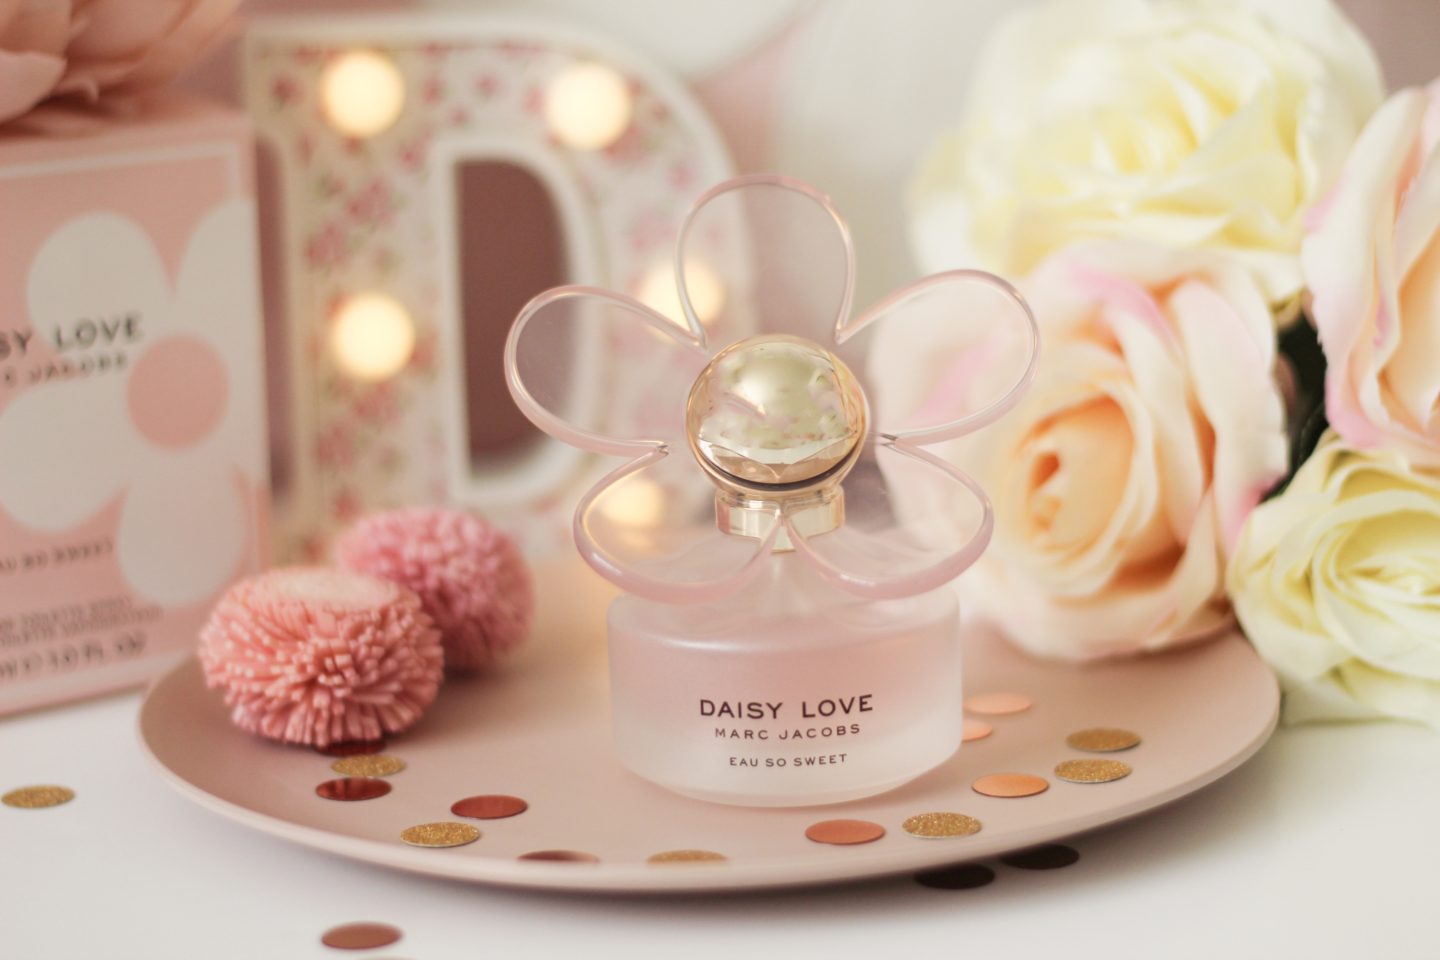 Daisy Love perfume by Marc Jacobs.